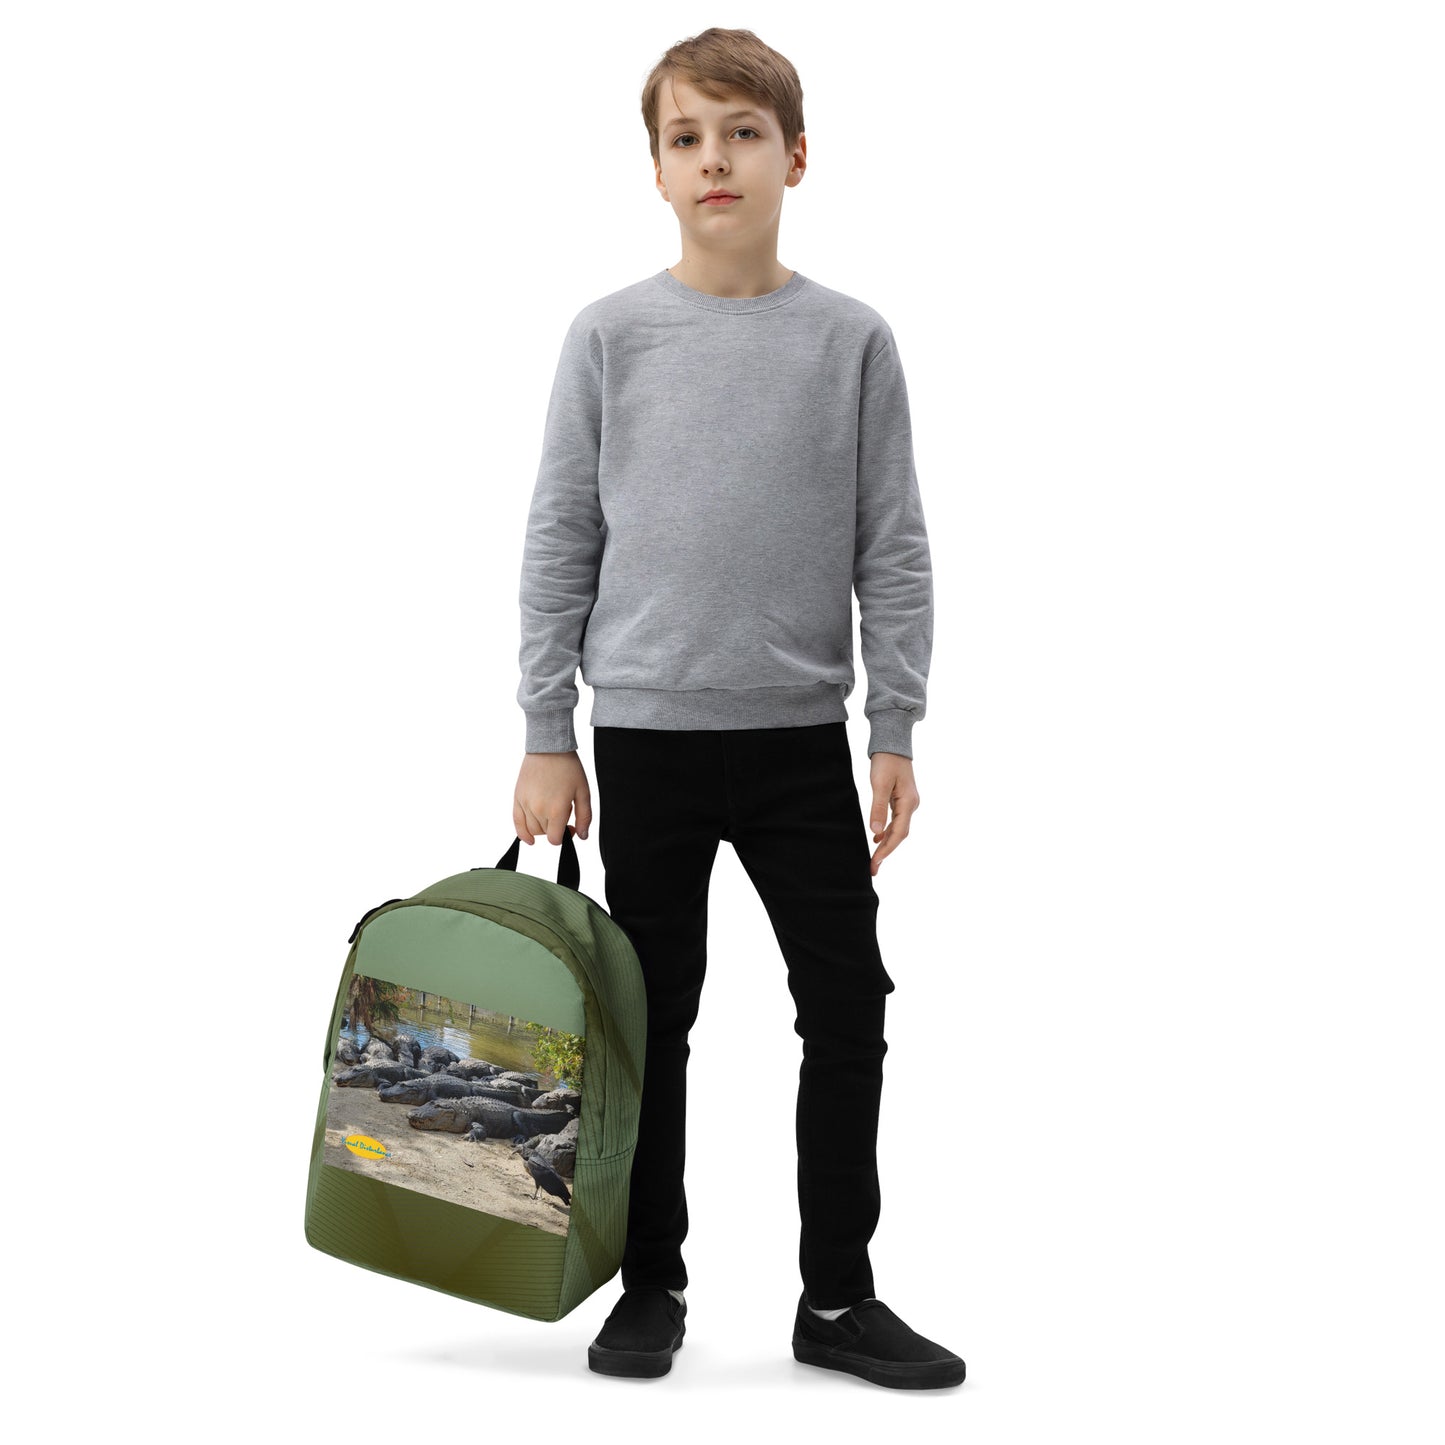 A Vulture and Alligators Minimalist Backpack